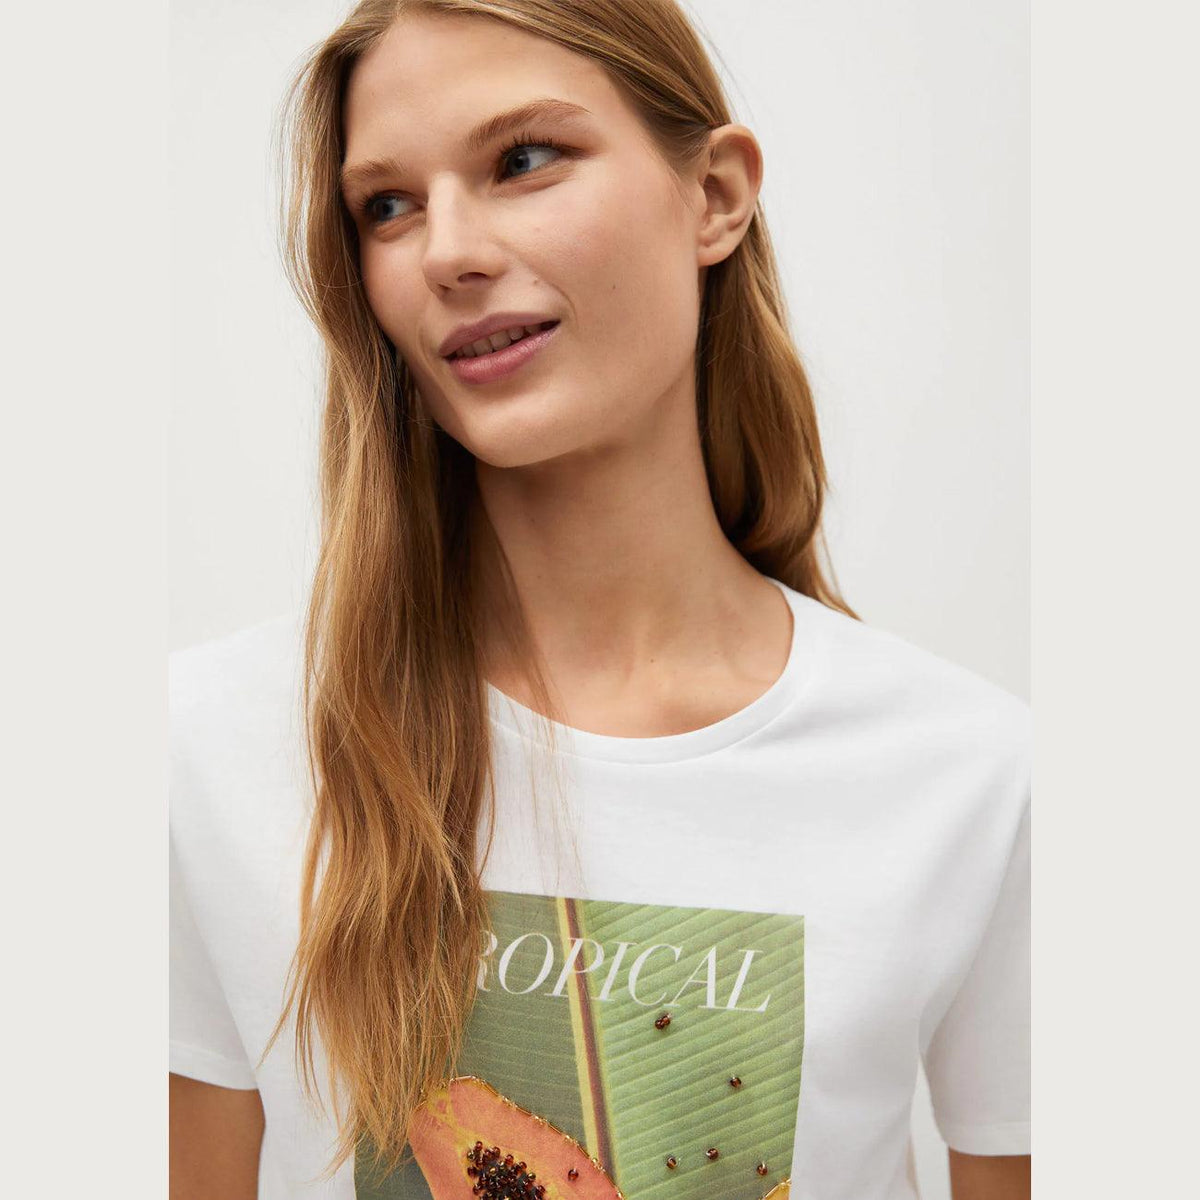 Premium Quality &quot;Tropical&quot; White Cotton Blend T-Shirt For Women (MN-11203) - Brands River